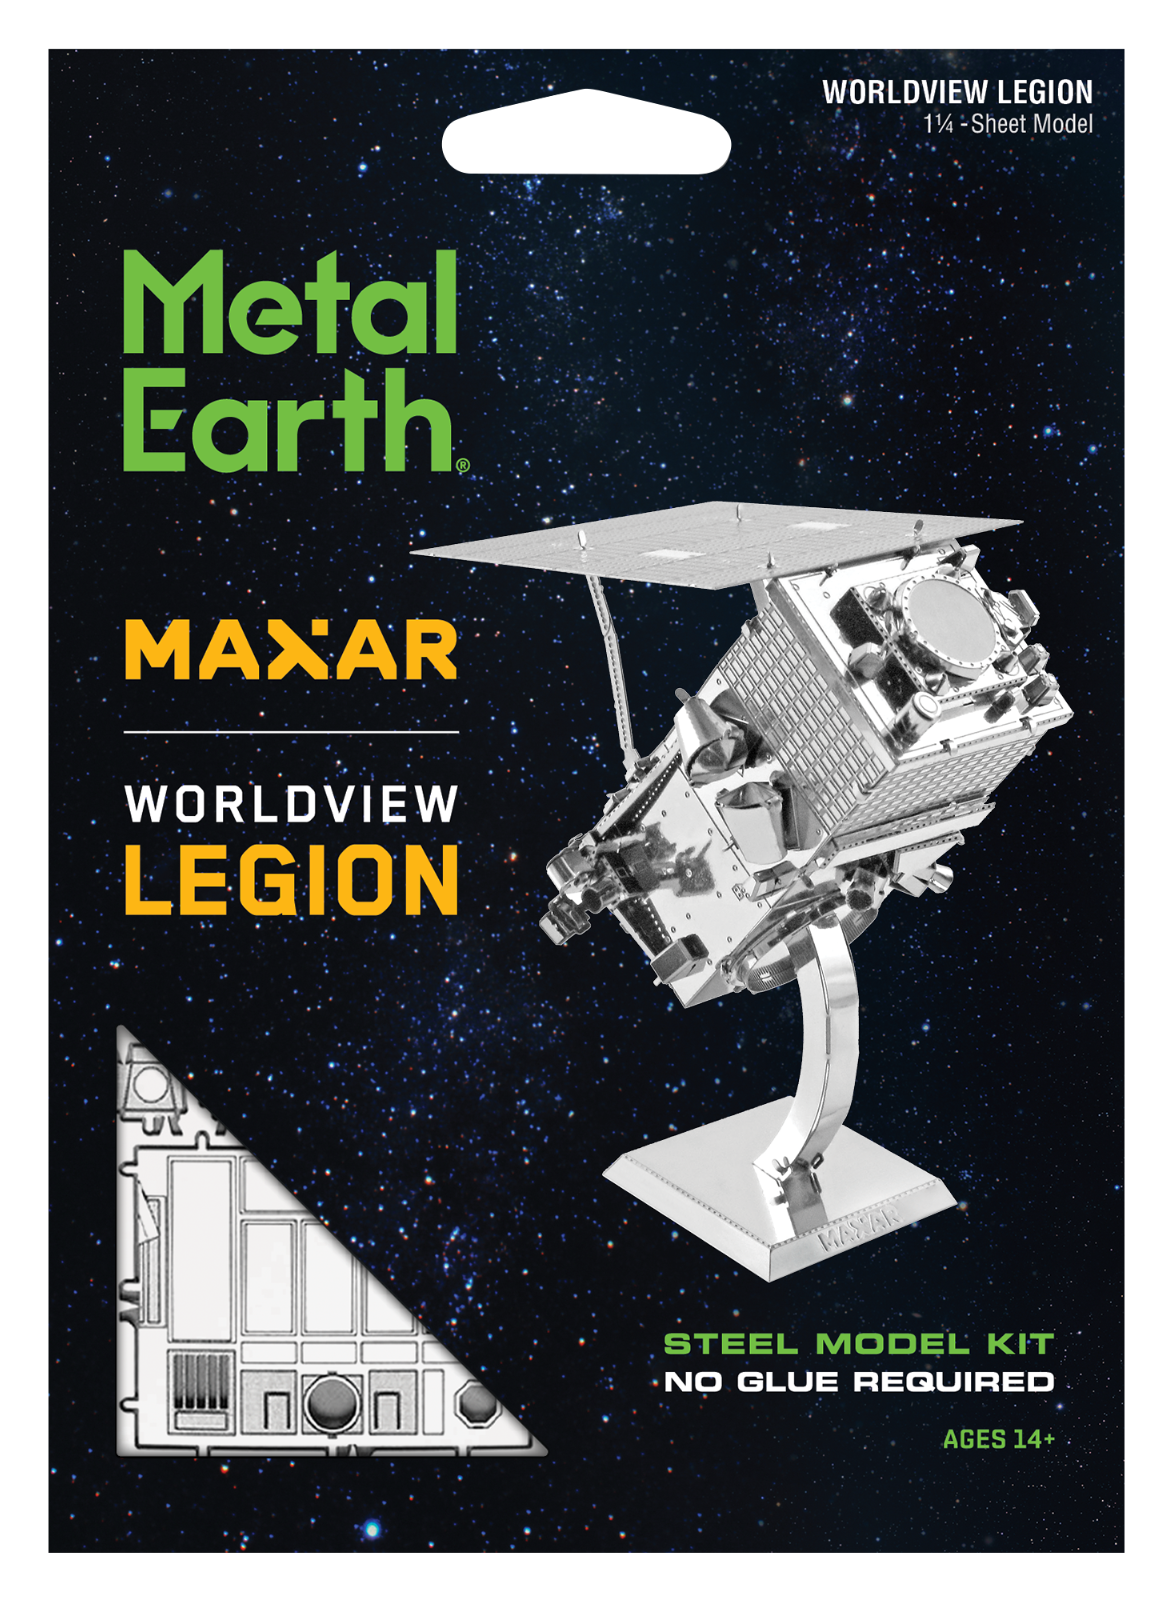 Metal Earth Maxar Worldview Legion